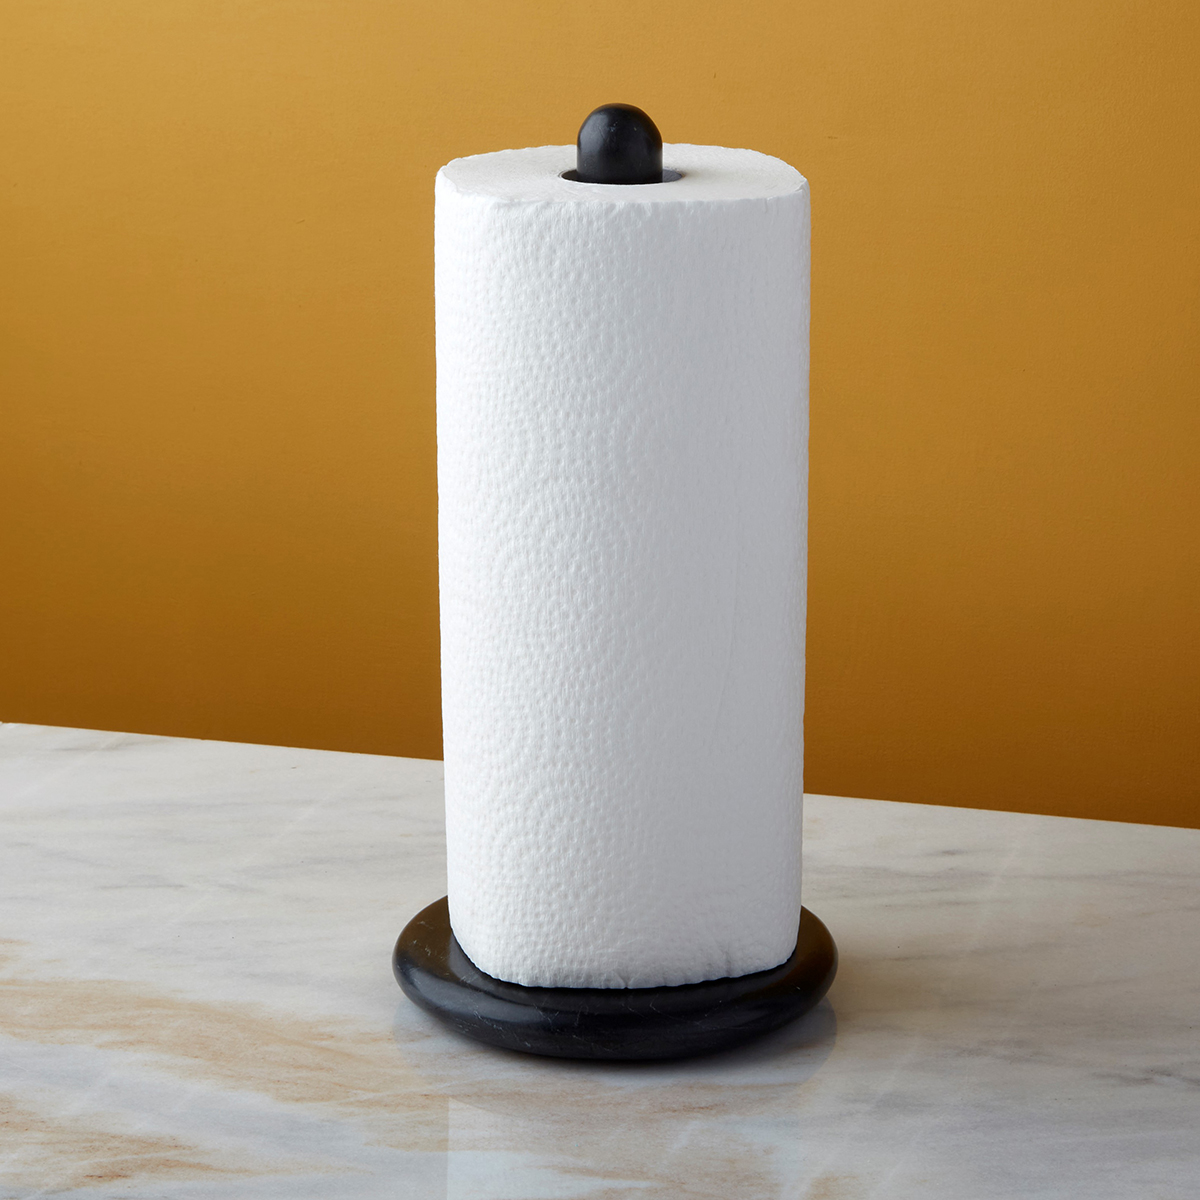 Paper Towel Holder, Paper Towel Holder For Countertop, Paper Towel